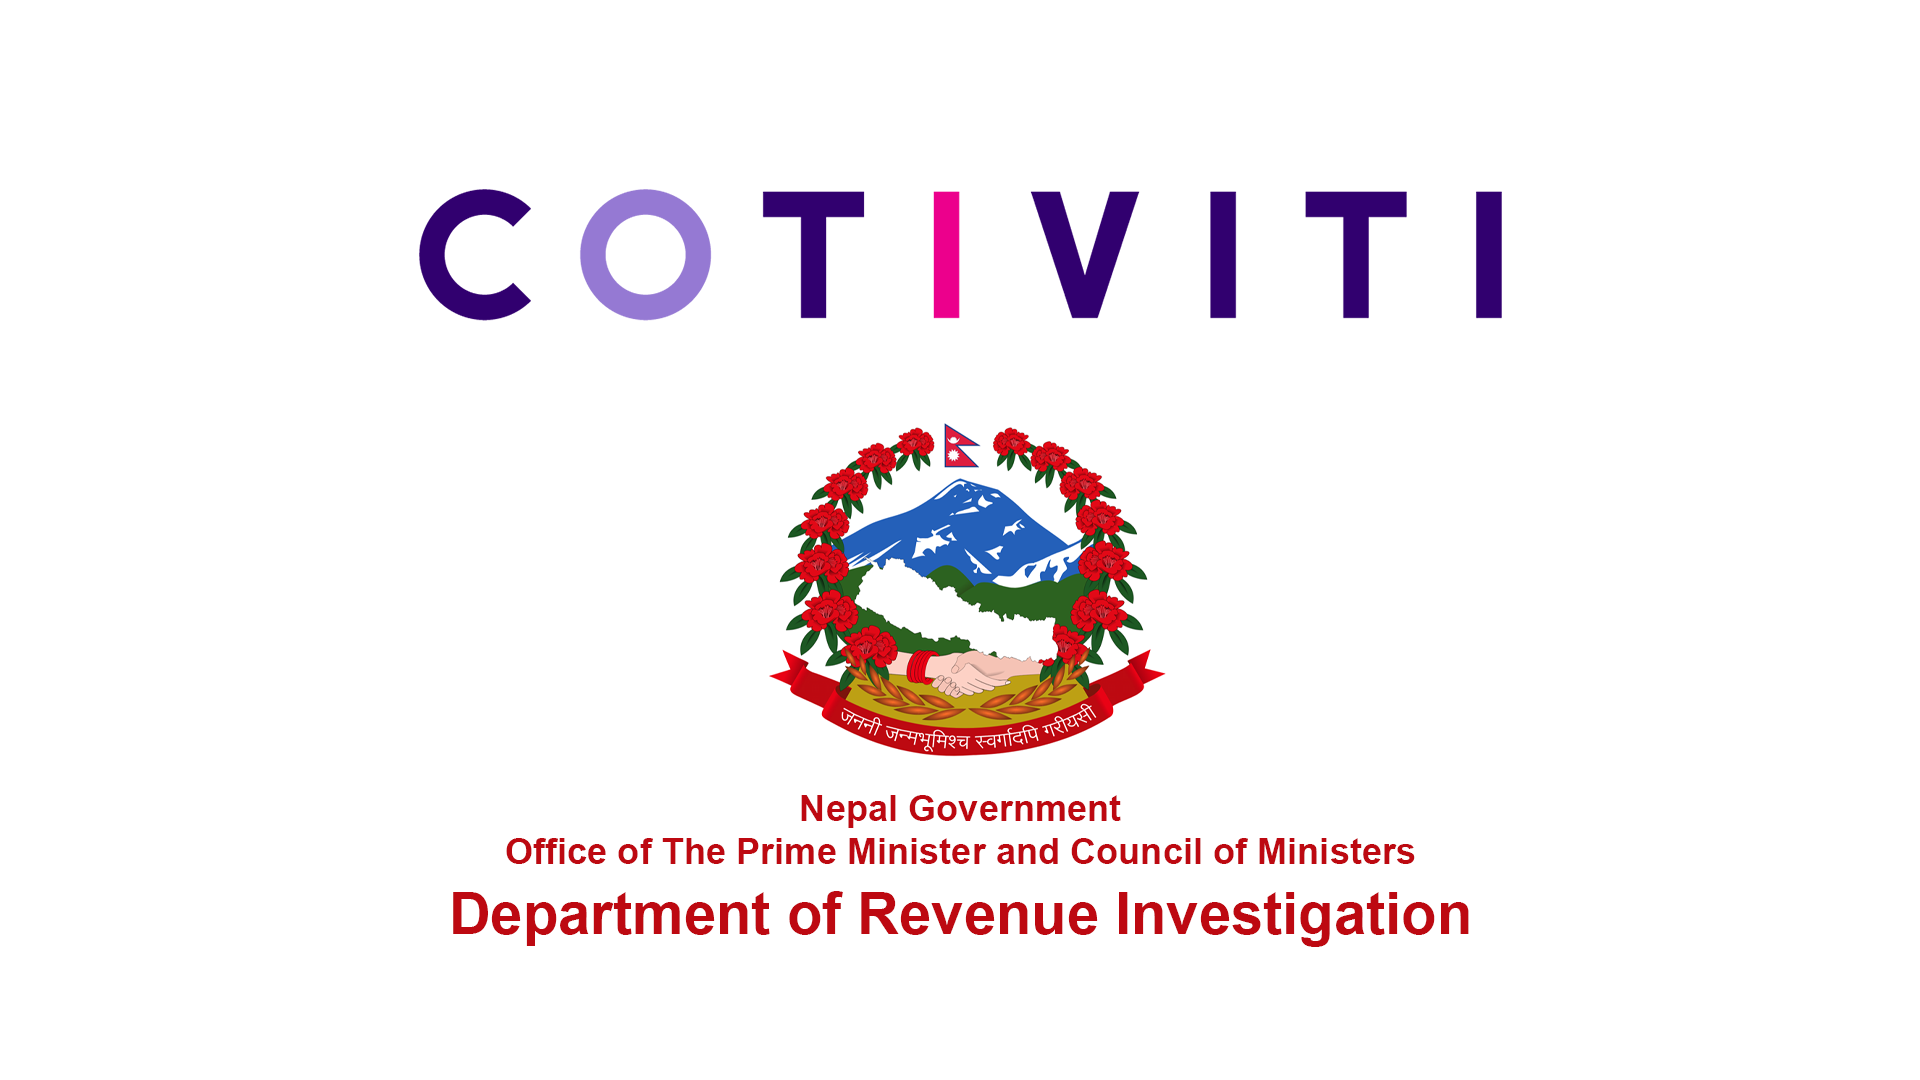 Department of Revenue Investigation files a case against Cotiviti Nepal